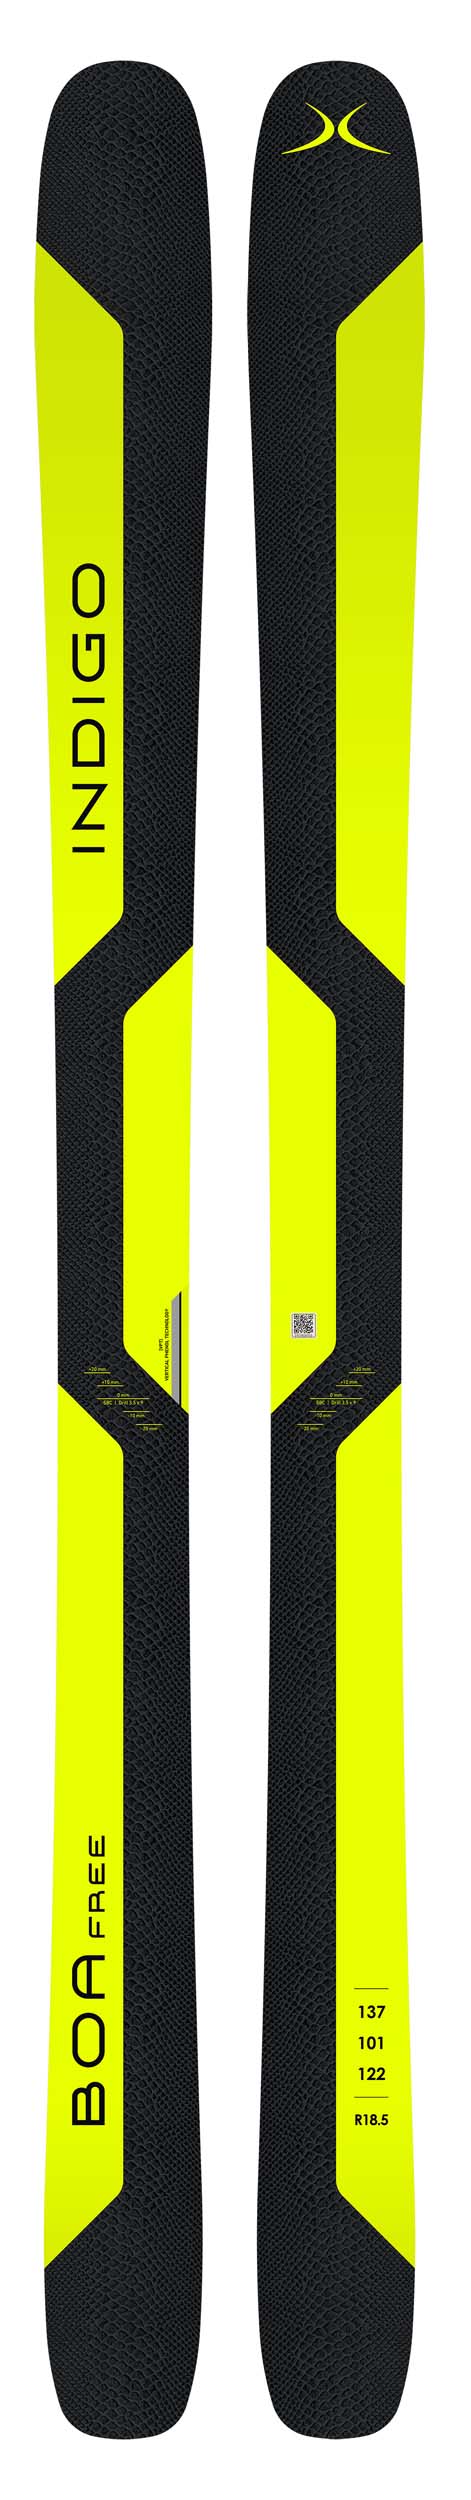 Indigo-Bogner Boa Free VP2 Skis (Without Bindings / Flat) NEW !! 170,177,184,191cm